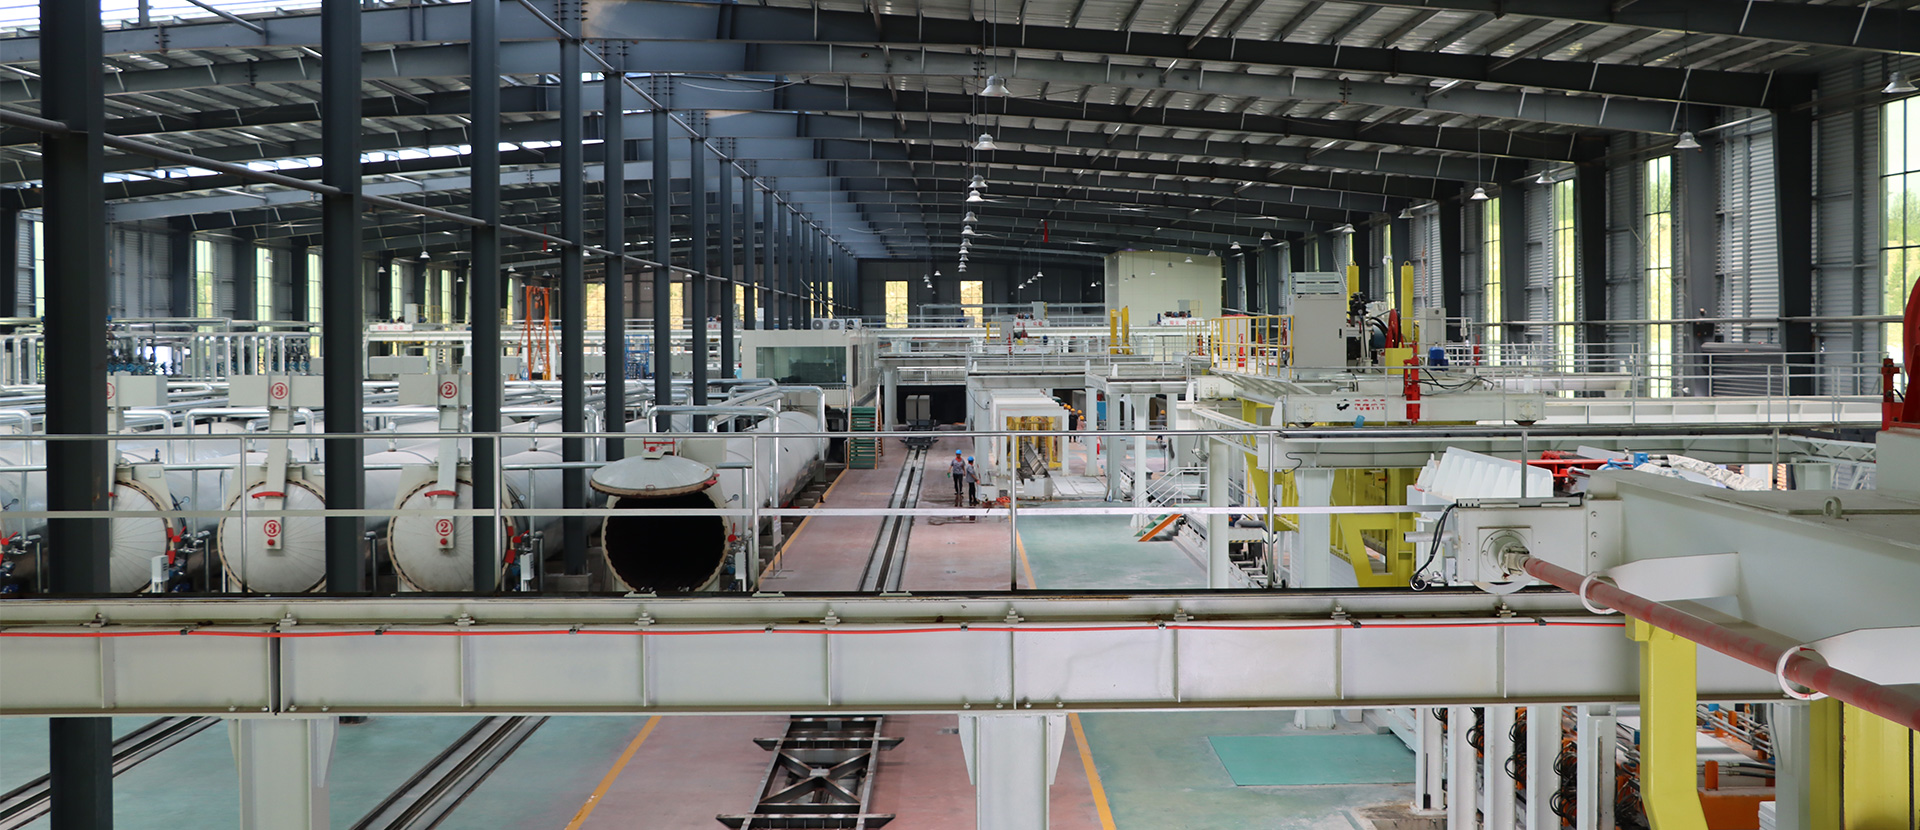 Display of Sunite Company's factory equipment